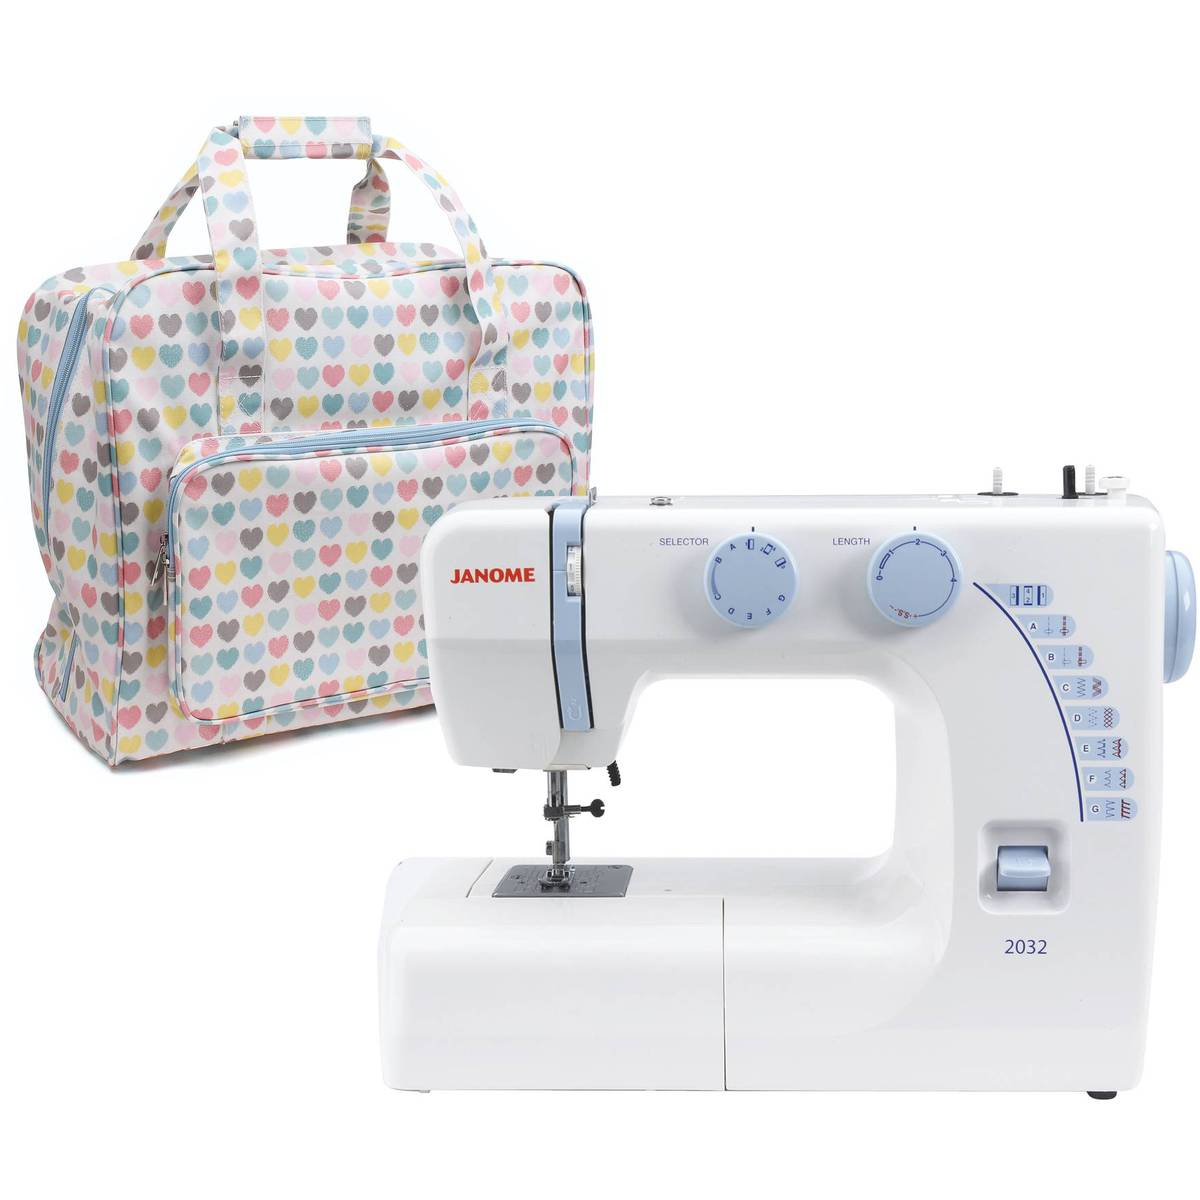 Janome Embroidery Patterns Janome 2032 Sewing Machine And Bag Bundle